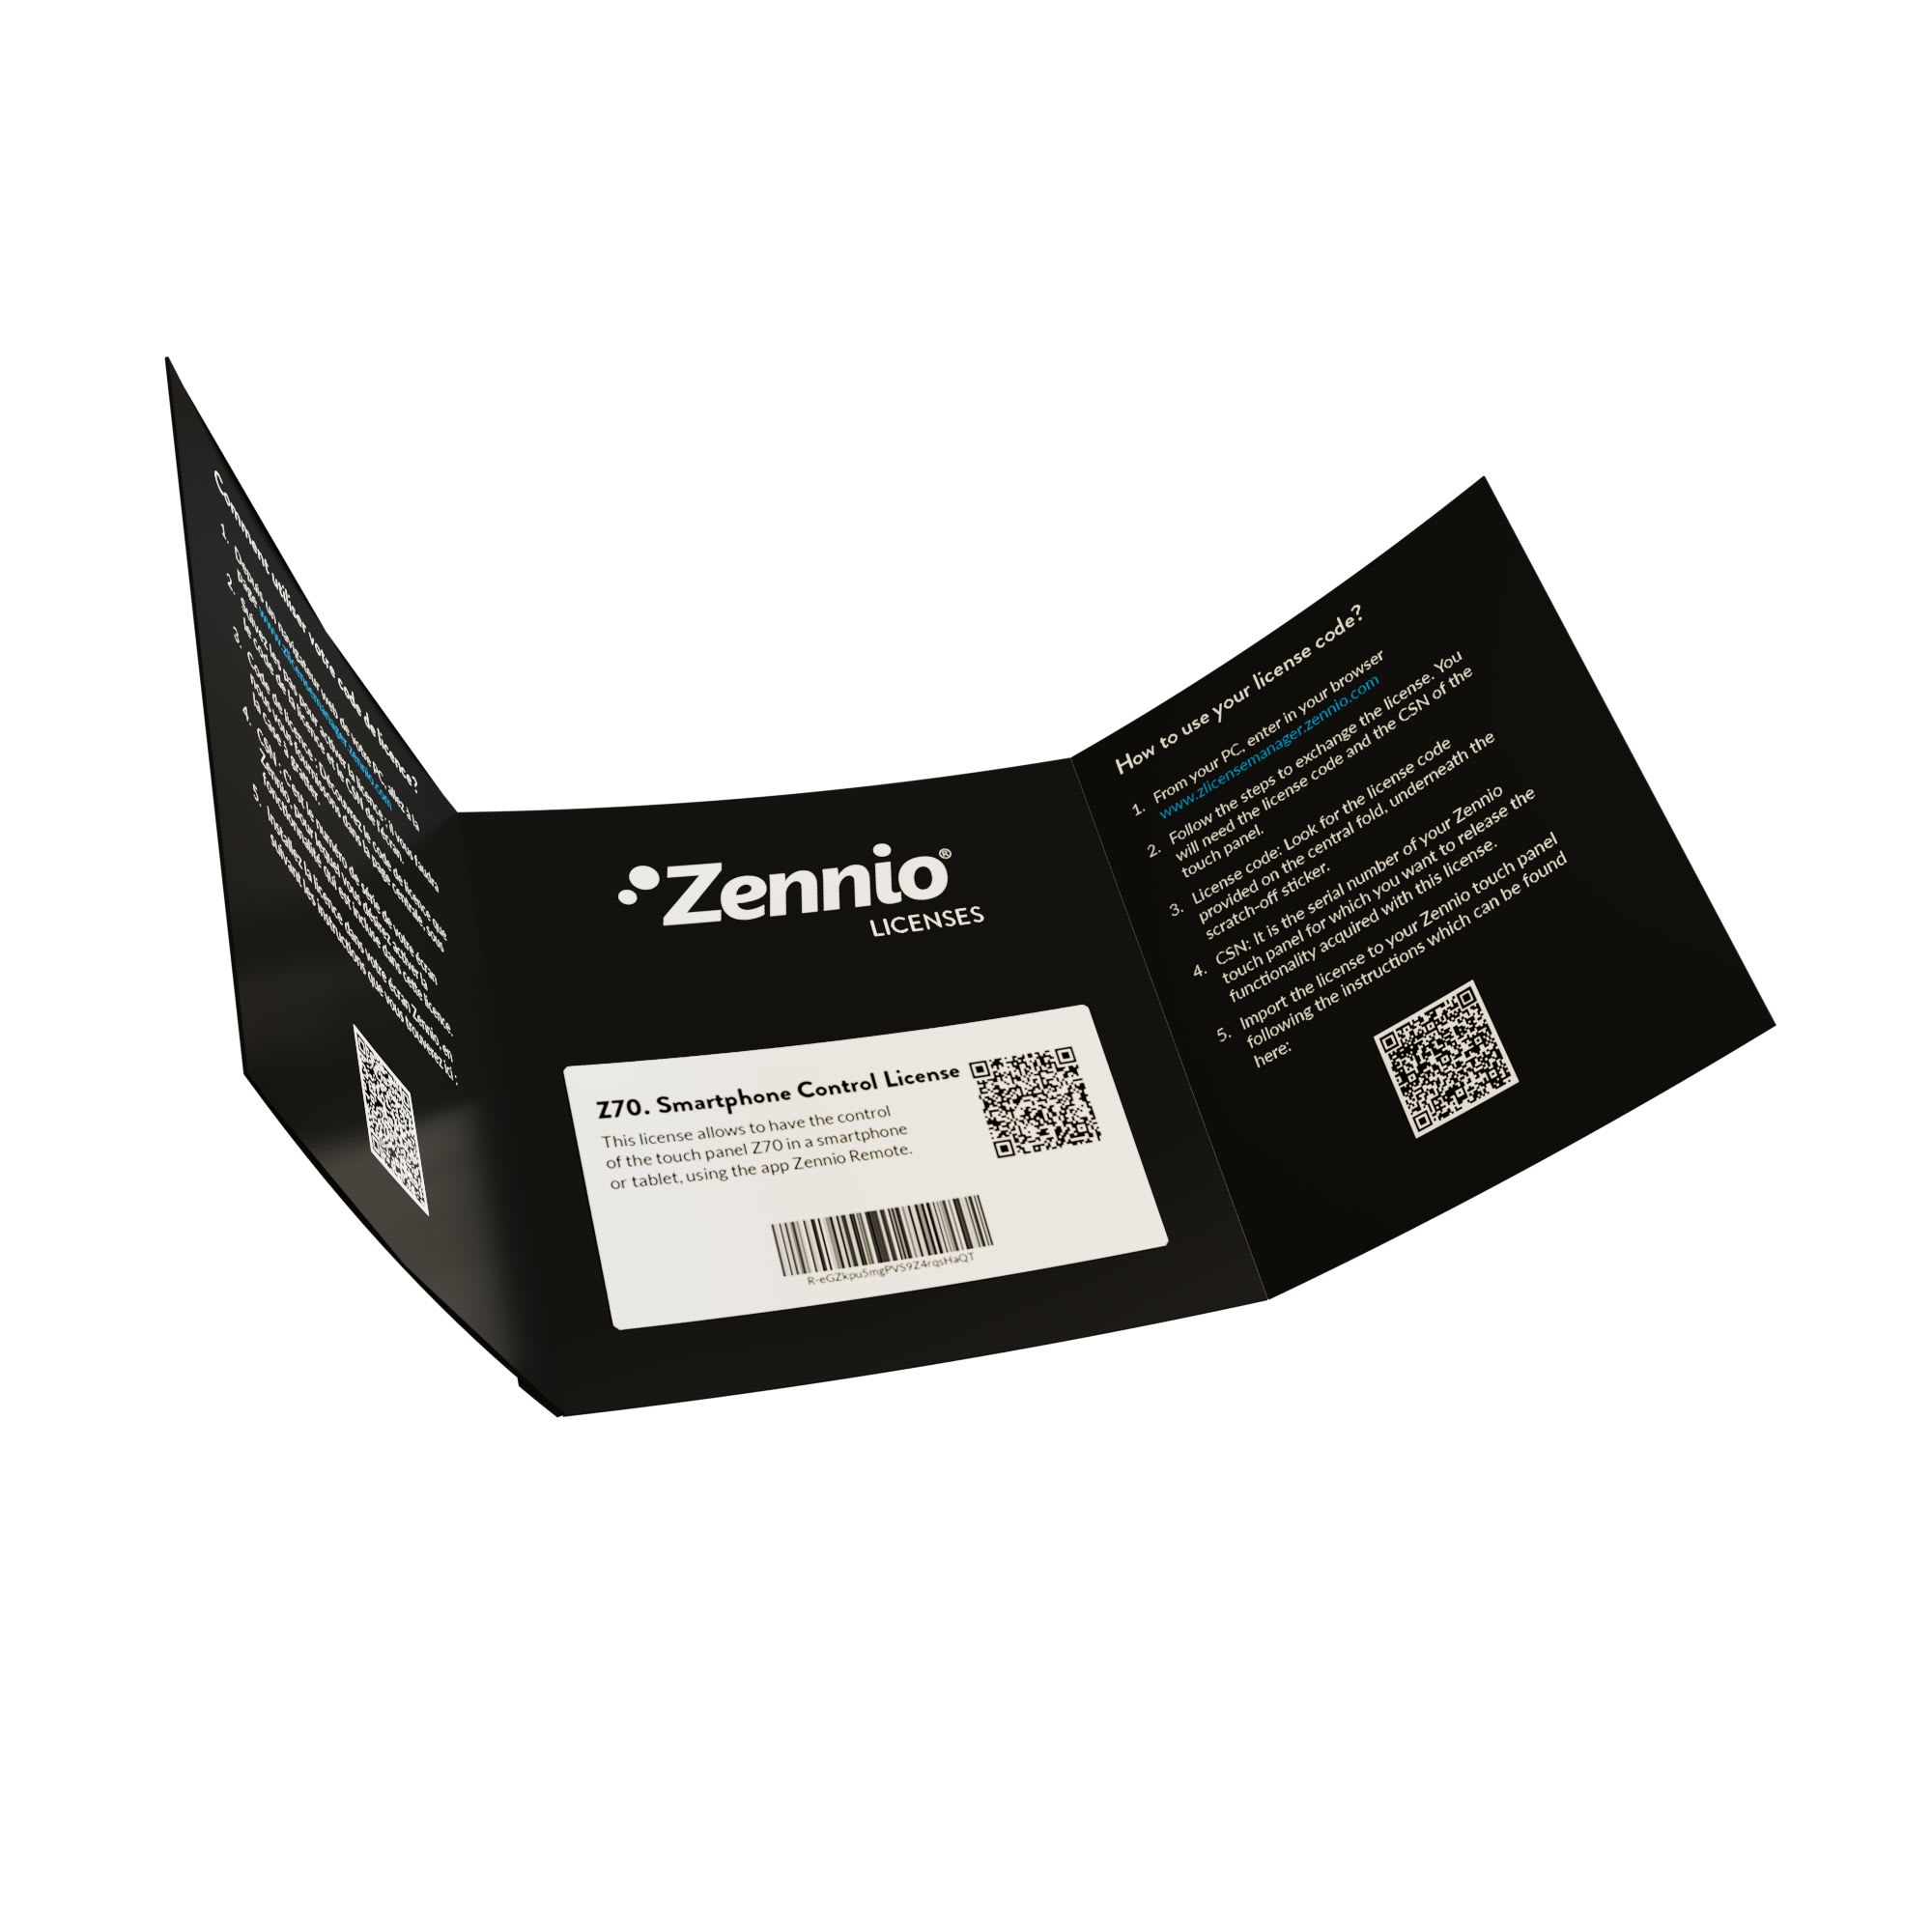 ZENNIO - Smartphone Control License pour Z50 Z70 & Z100. . Licence en coffret